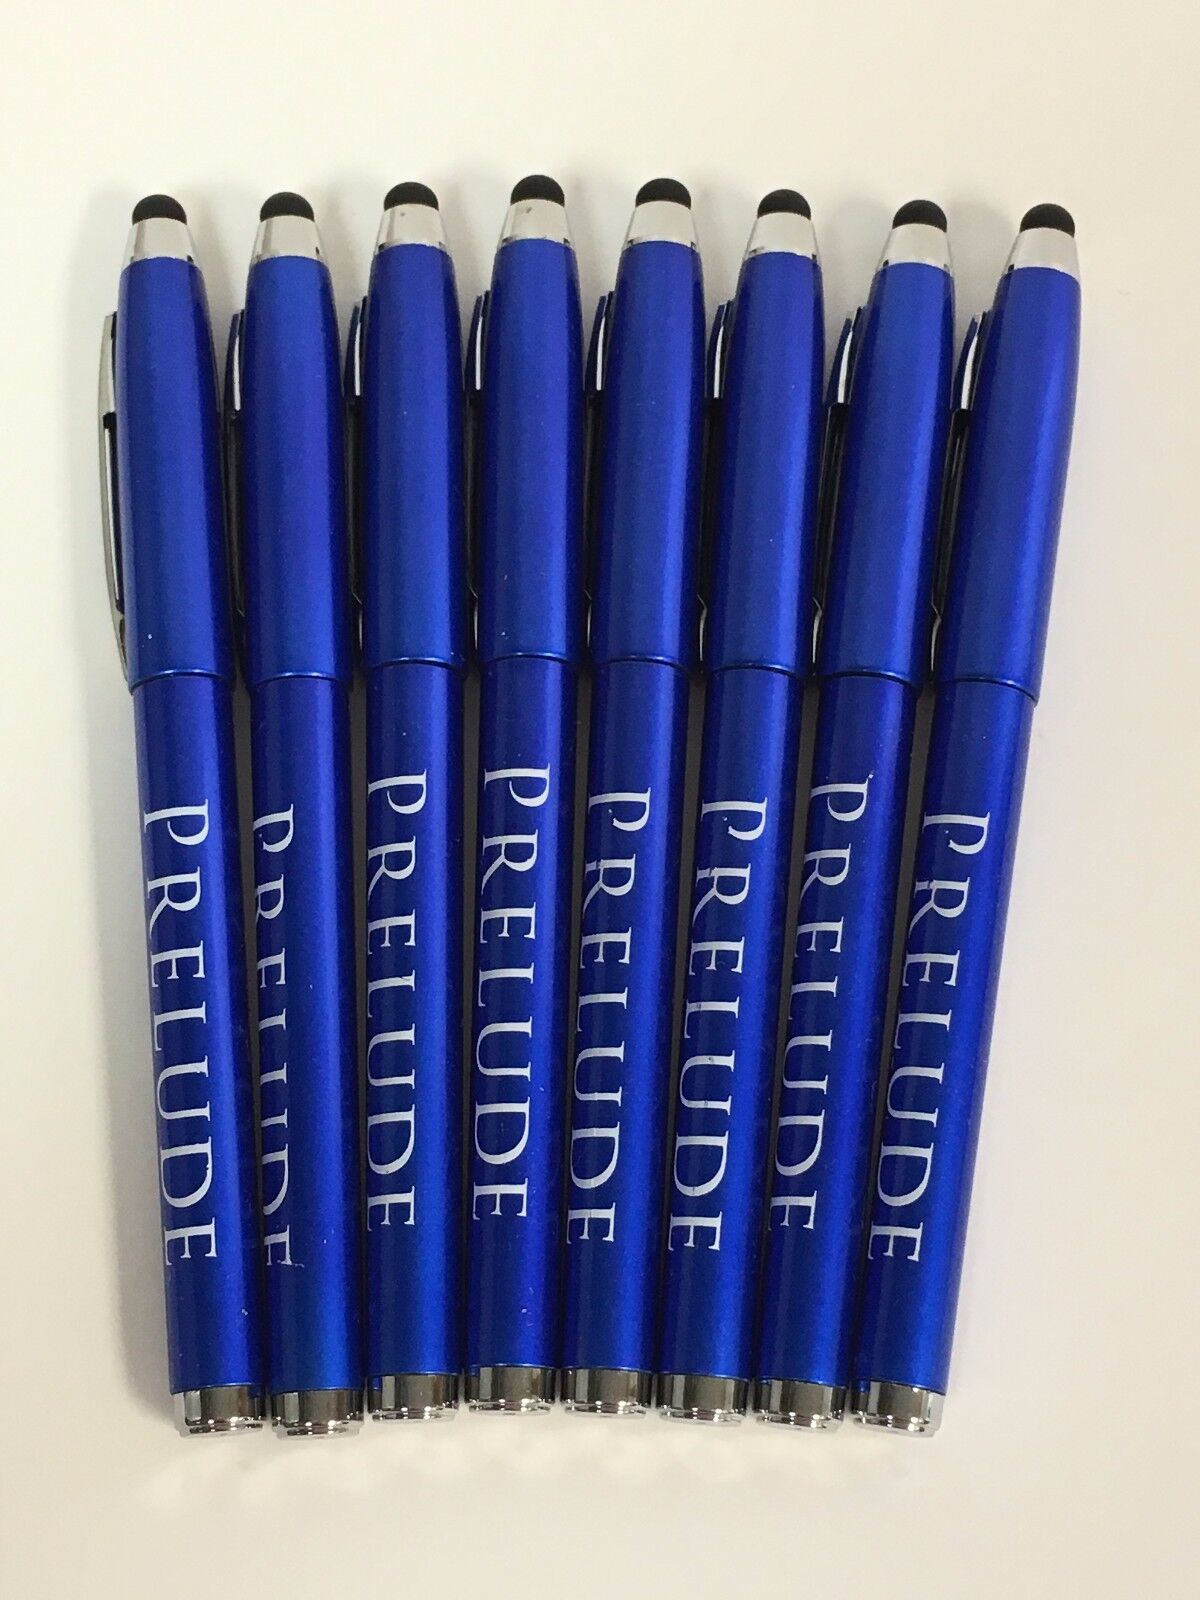 8 Lot Misprint GEL Ink Soft Tip Stylus Pen, BLUE INK, Metallic Blue Barrel Unbranded/Generic Does Not Apply